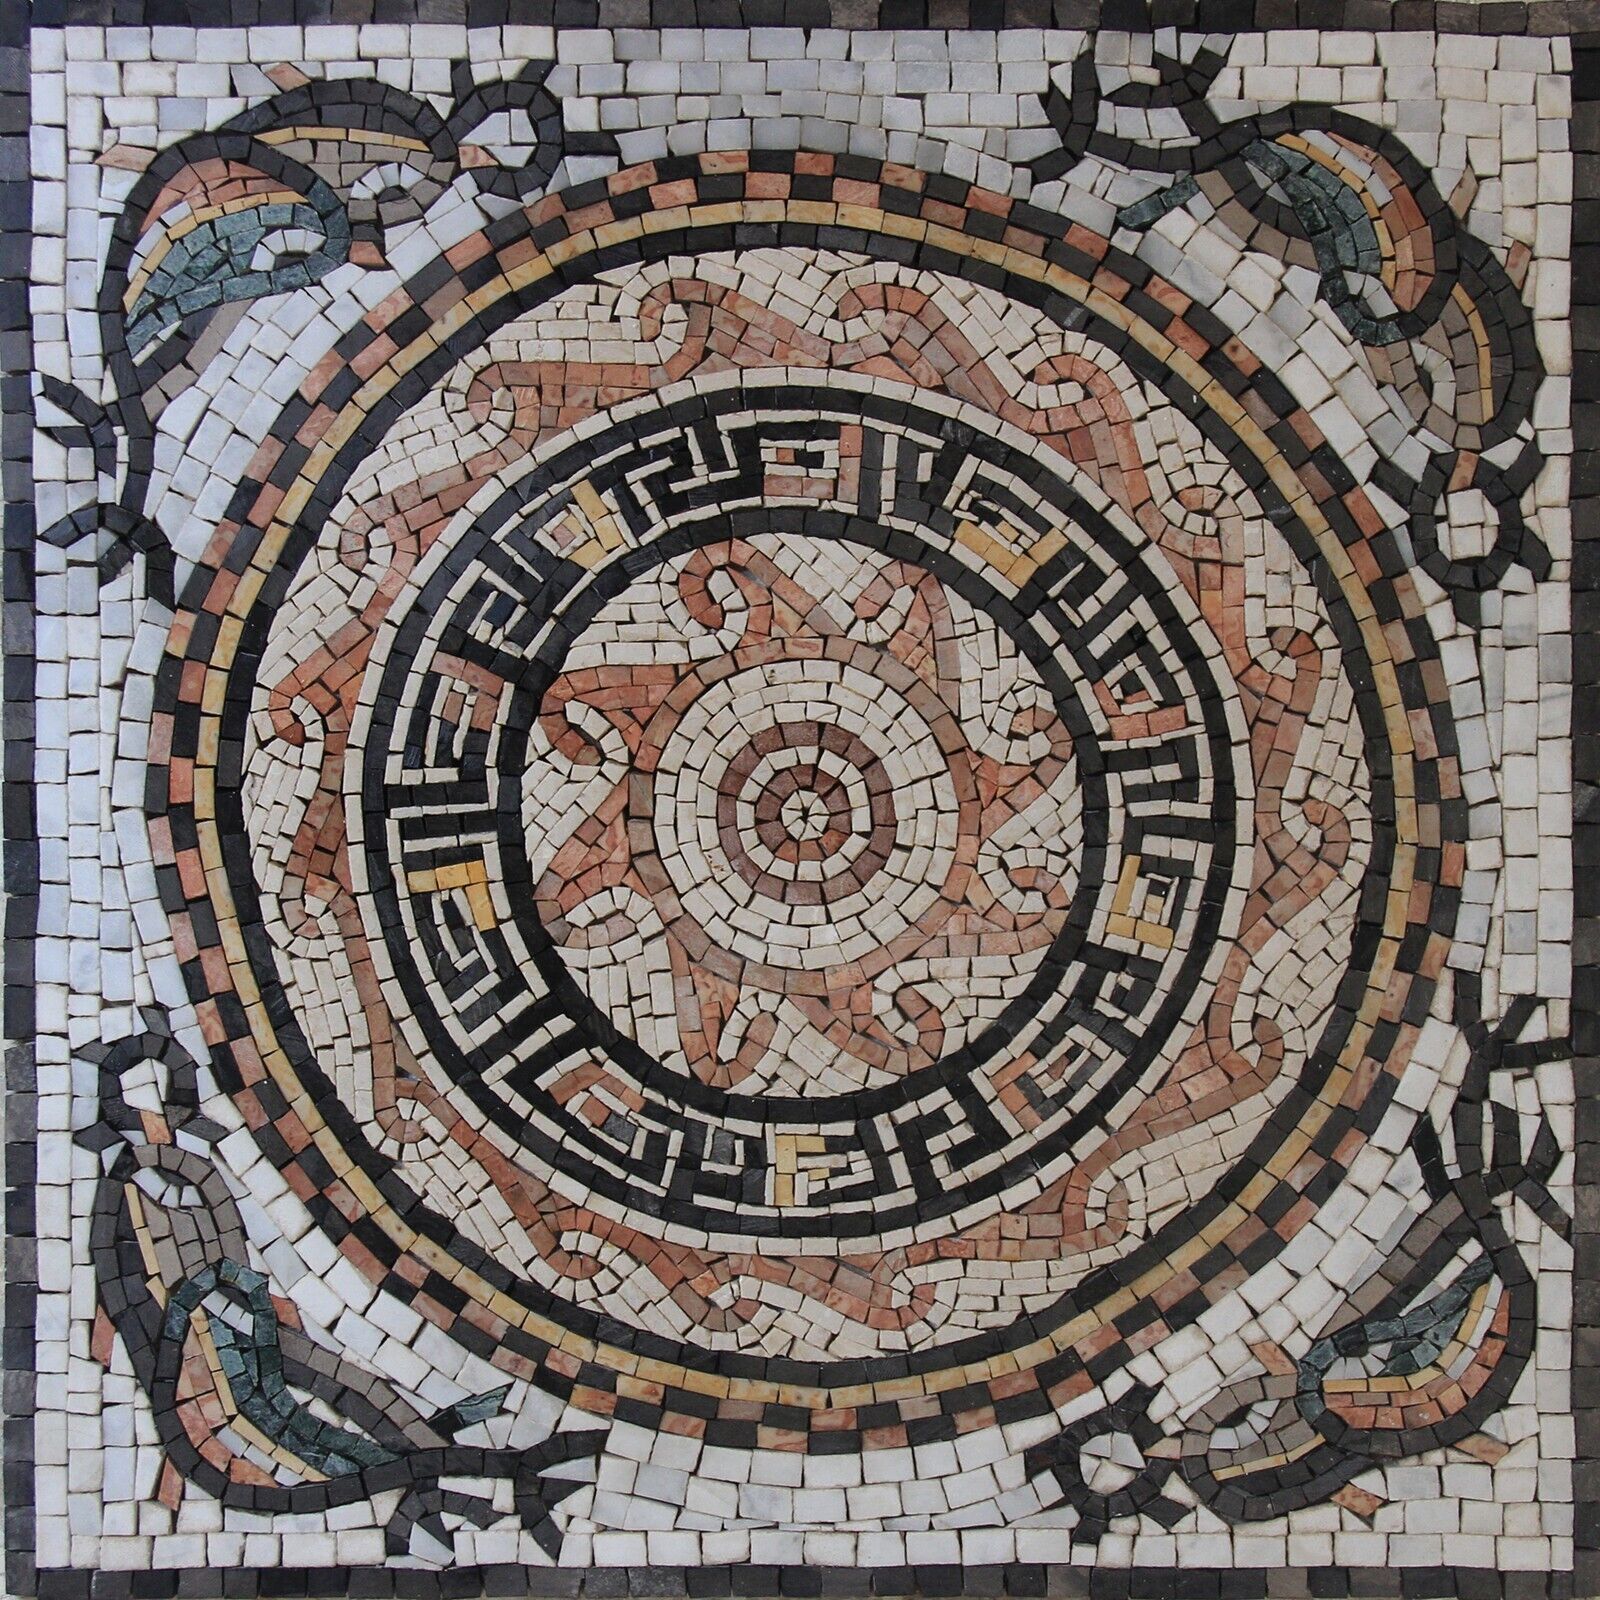 Mosaic Marble Roman Patterns GEOMETRICAL Floor Art Design  20x20 Inches